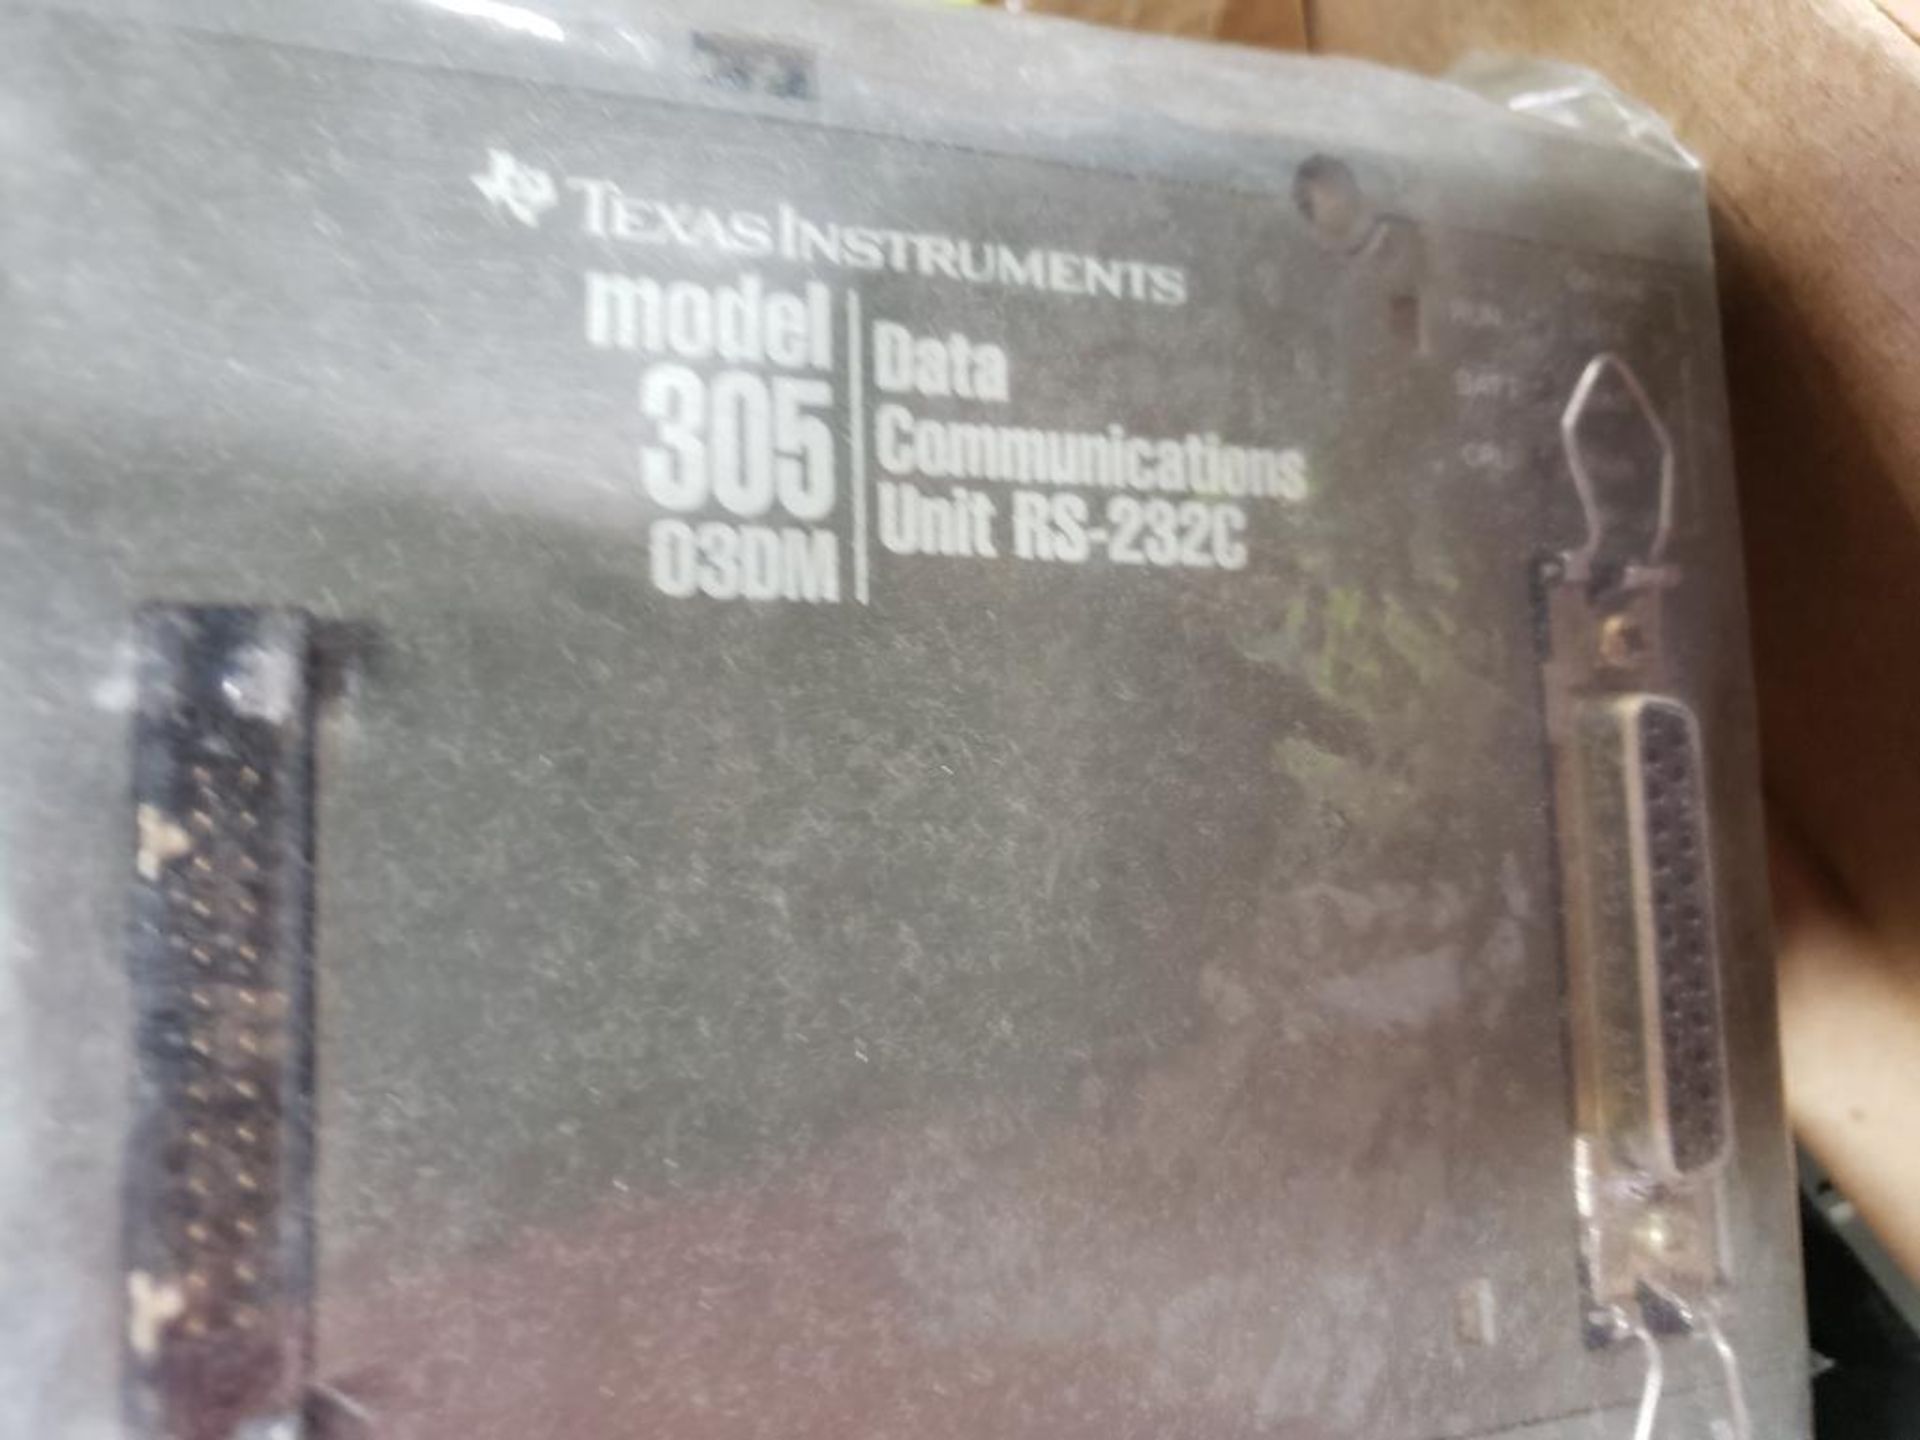 Qty 4 - Texas Instruments 305-PROG programming units. - Image 6 of 8